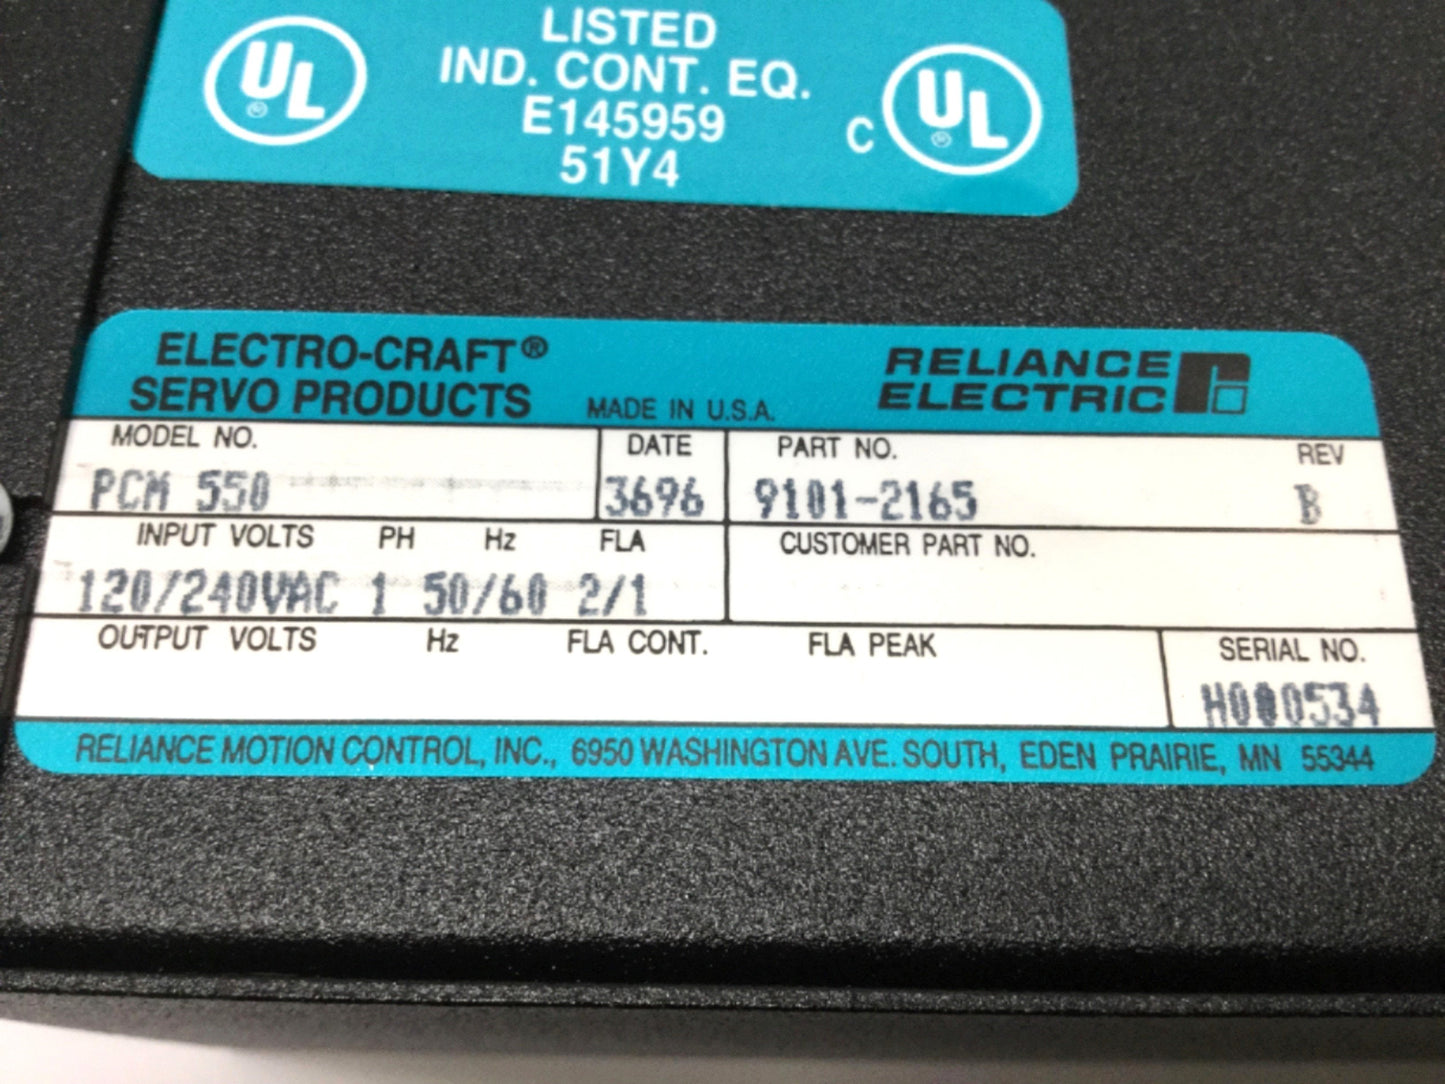 Used Reliance Electro-Craft PCM-550 iQ-550 Servo Position Control Module 120/240VAC